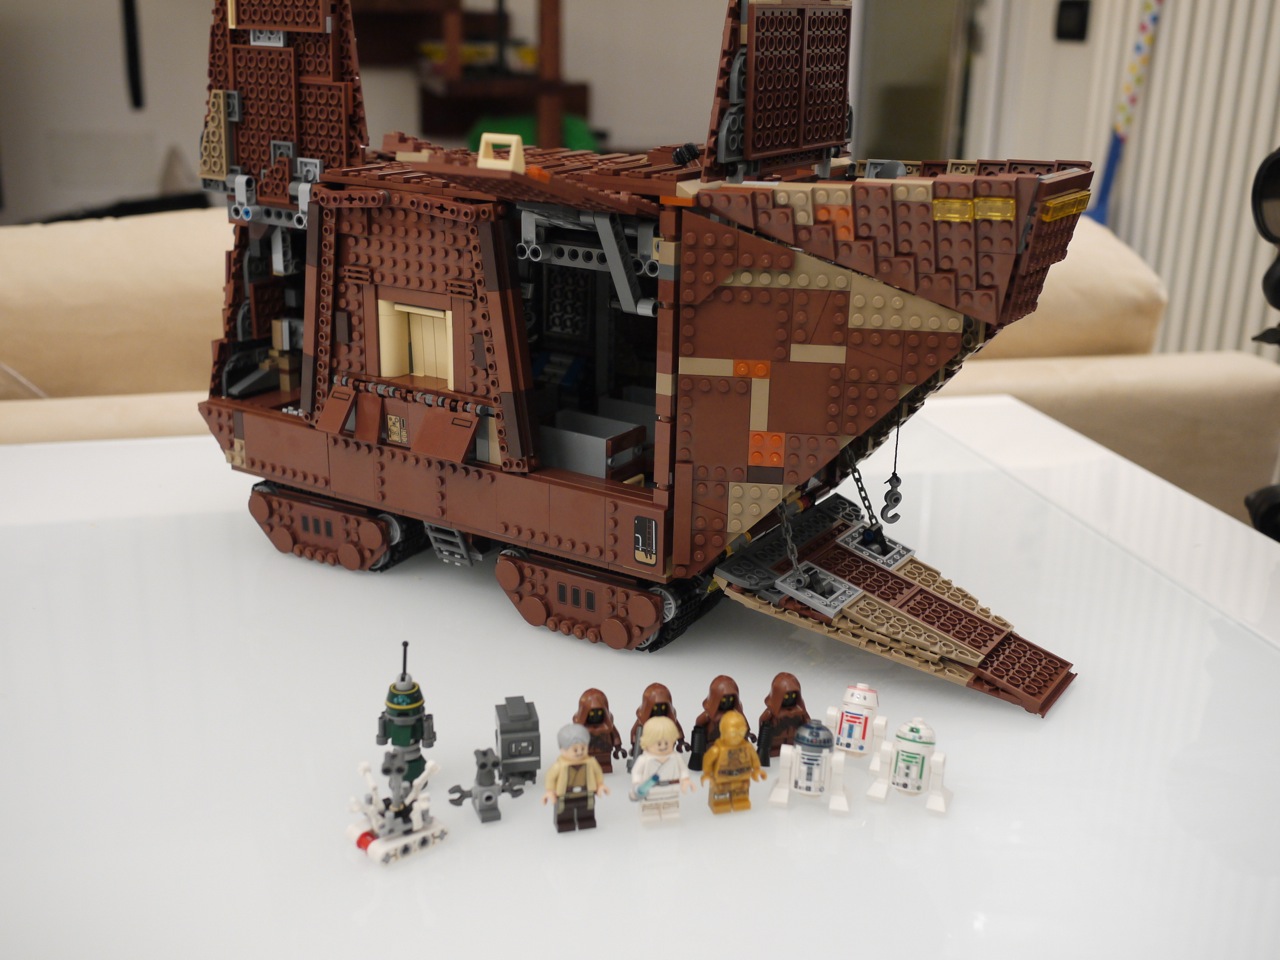 Lego Star Wars Sandcrawler UCS 75059 #LegoNight Review